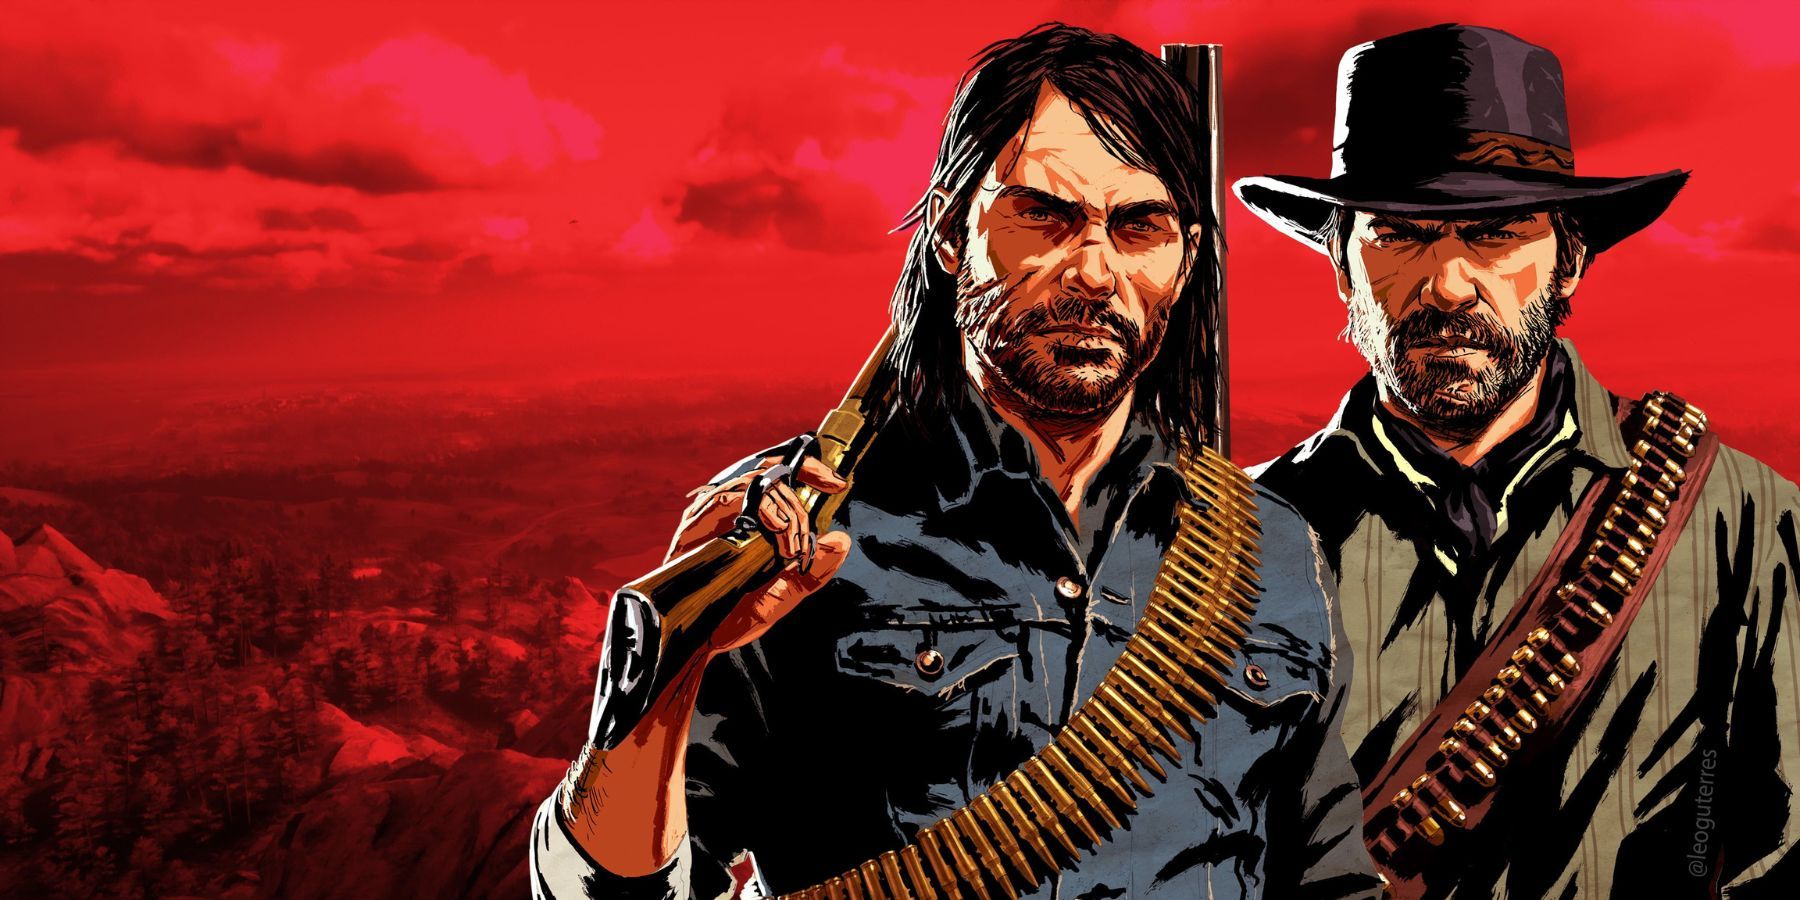 What Happens Between Red Dead Redemption's Big Years